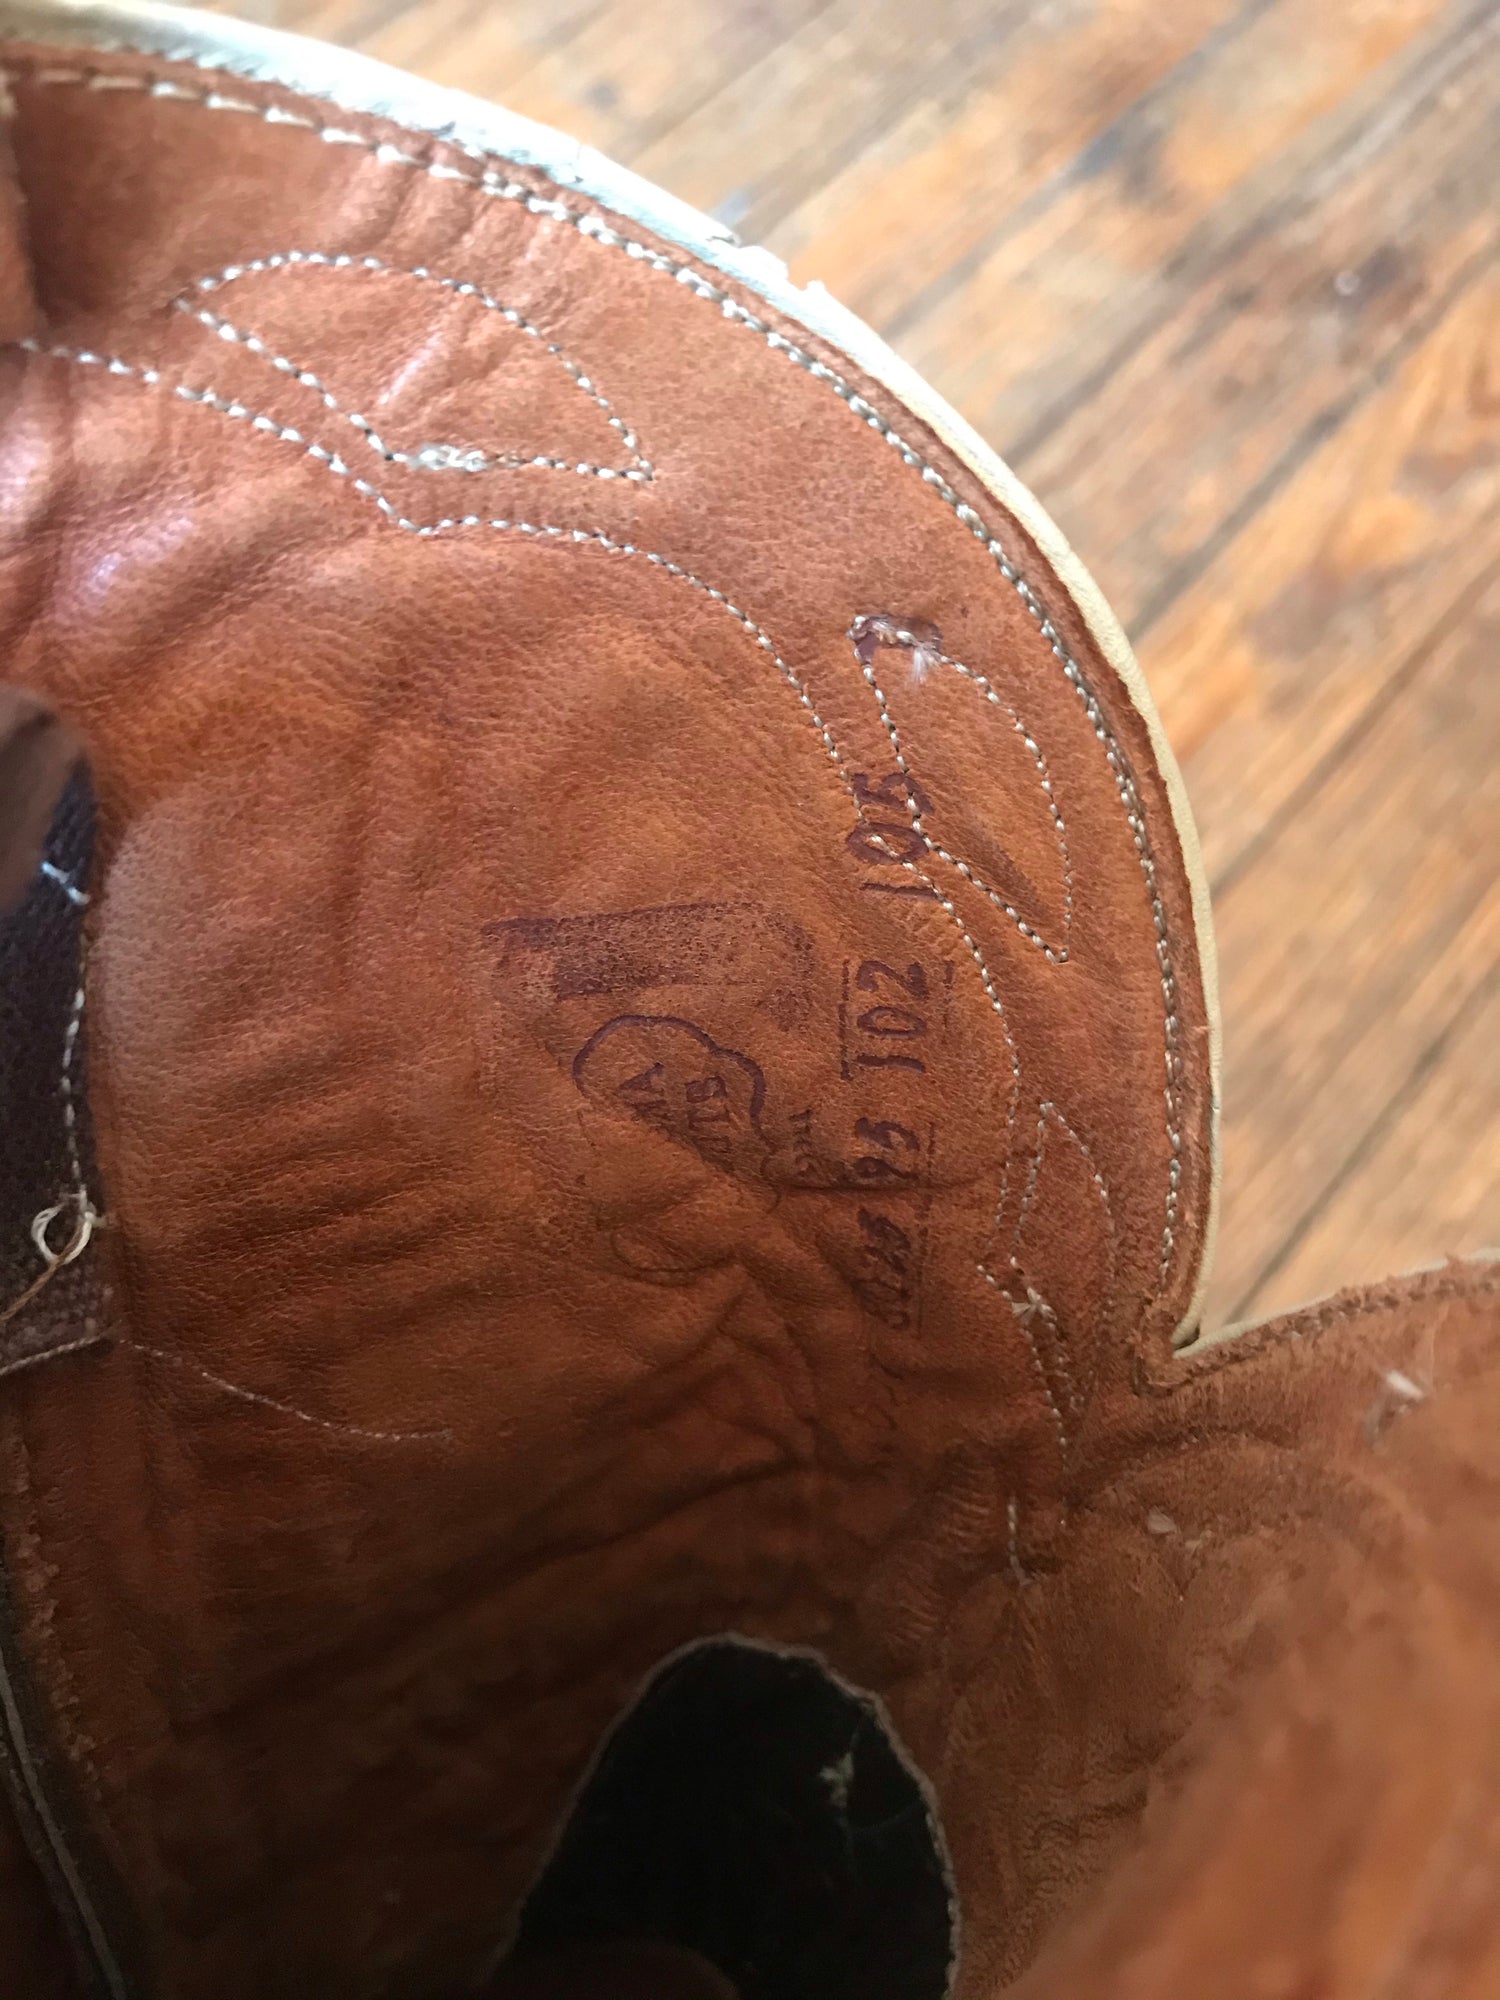 Vintage 1930’s Reproduction Leather Nocona Cowboy Boots